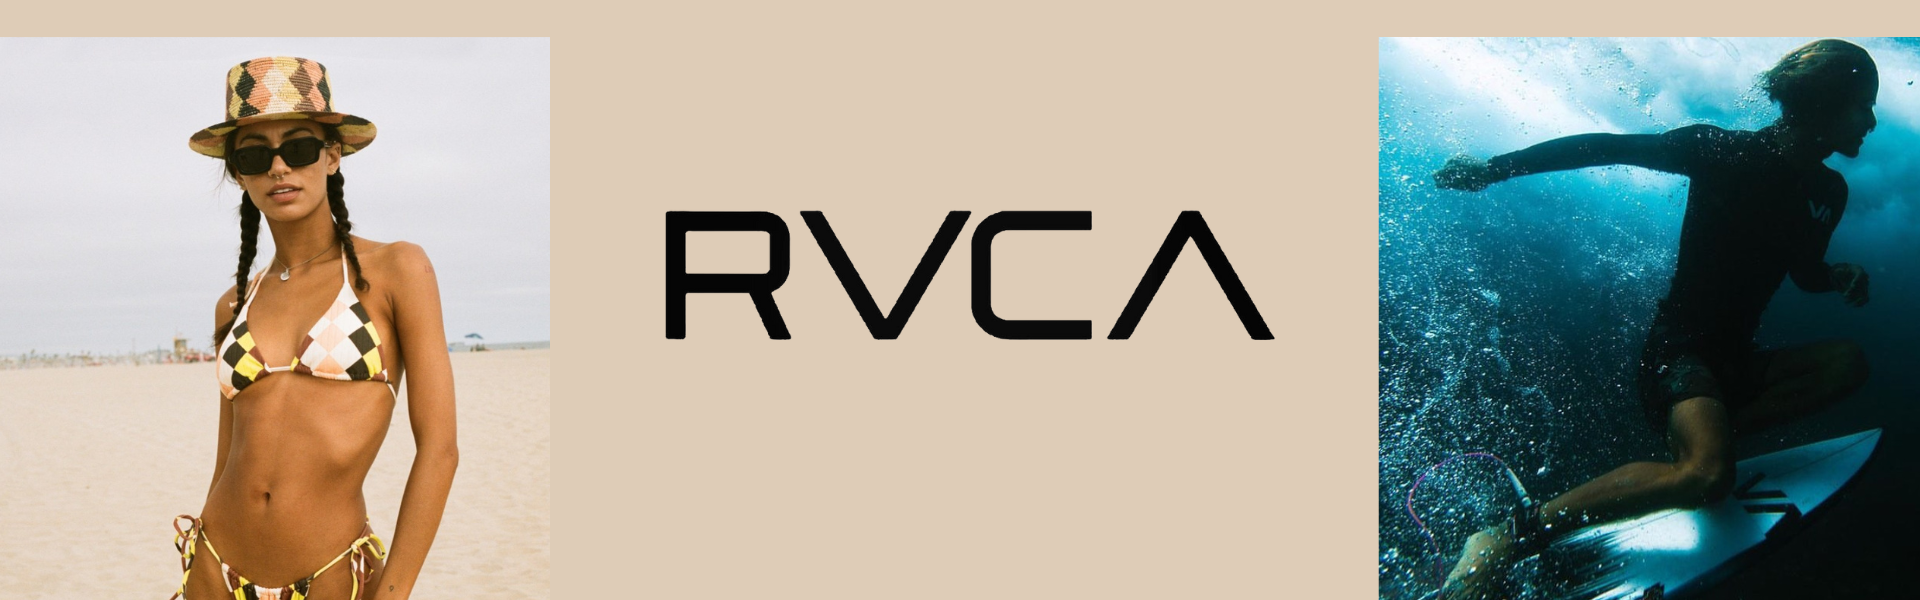 Shop RVCA | Sun Diego Boardshop